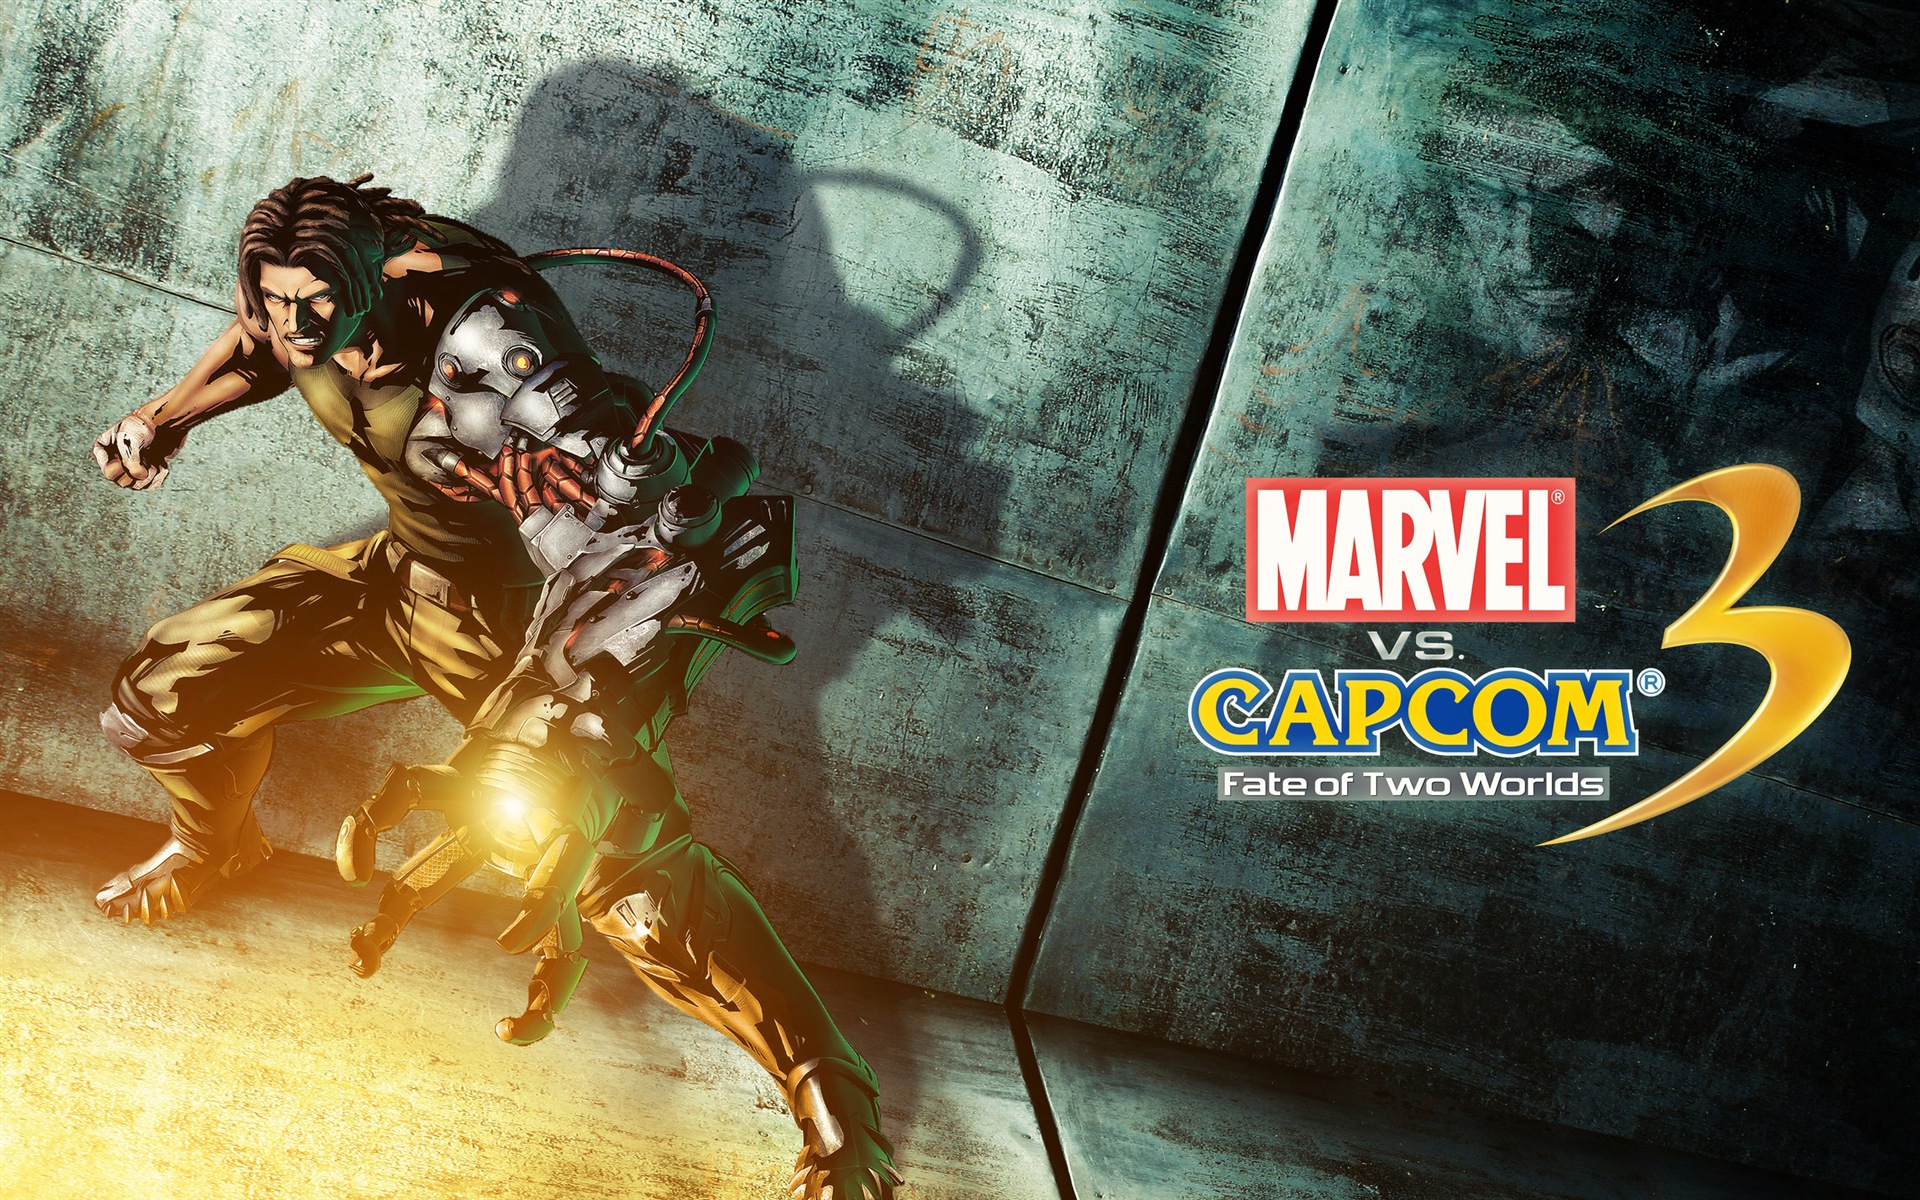 Marvel VS. Capcom 3: Fate of Two Worlds 漫画英雄VS.卡普空3 高清游戏壁纸8 - 1920x1200